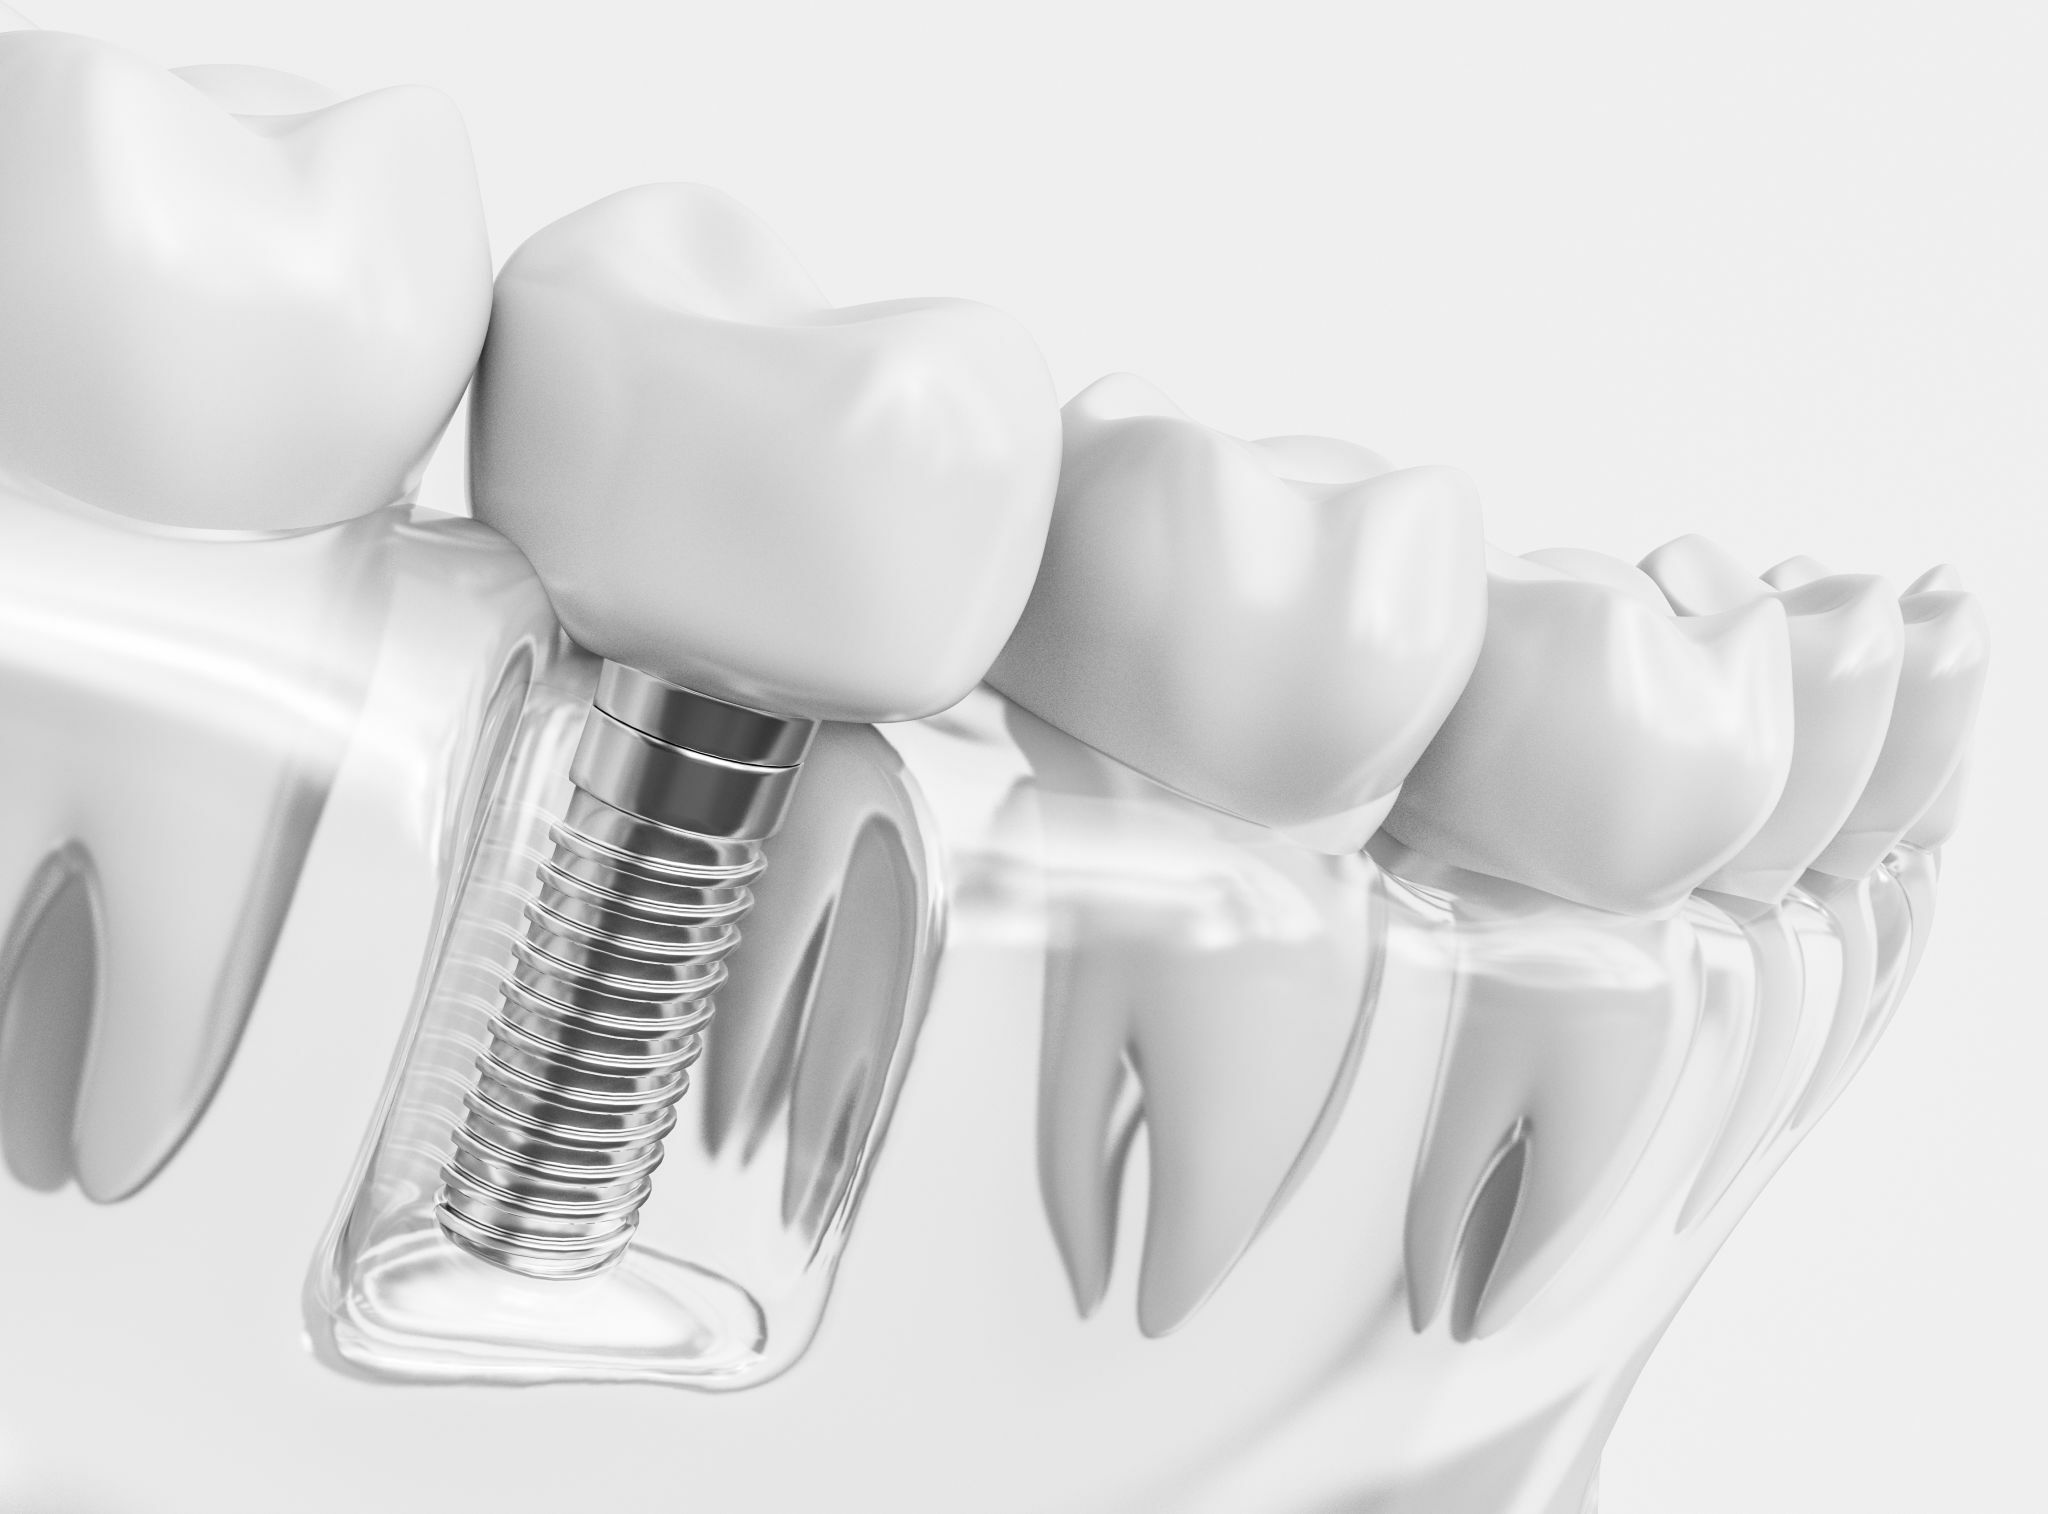 Dental Implants Aberdeen